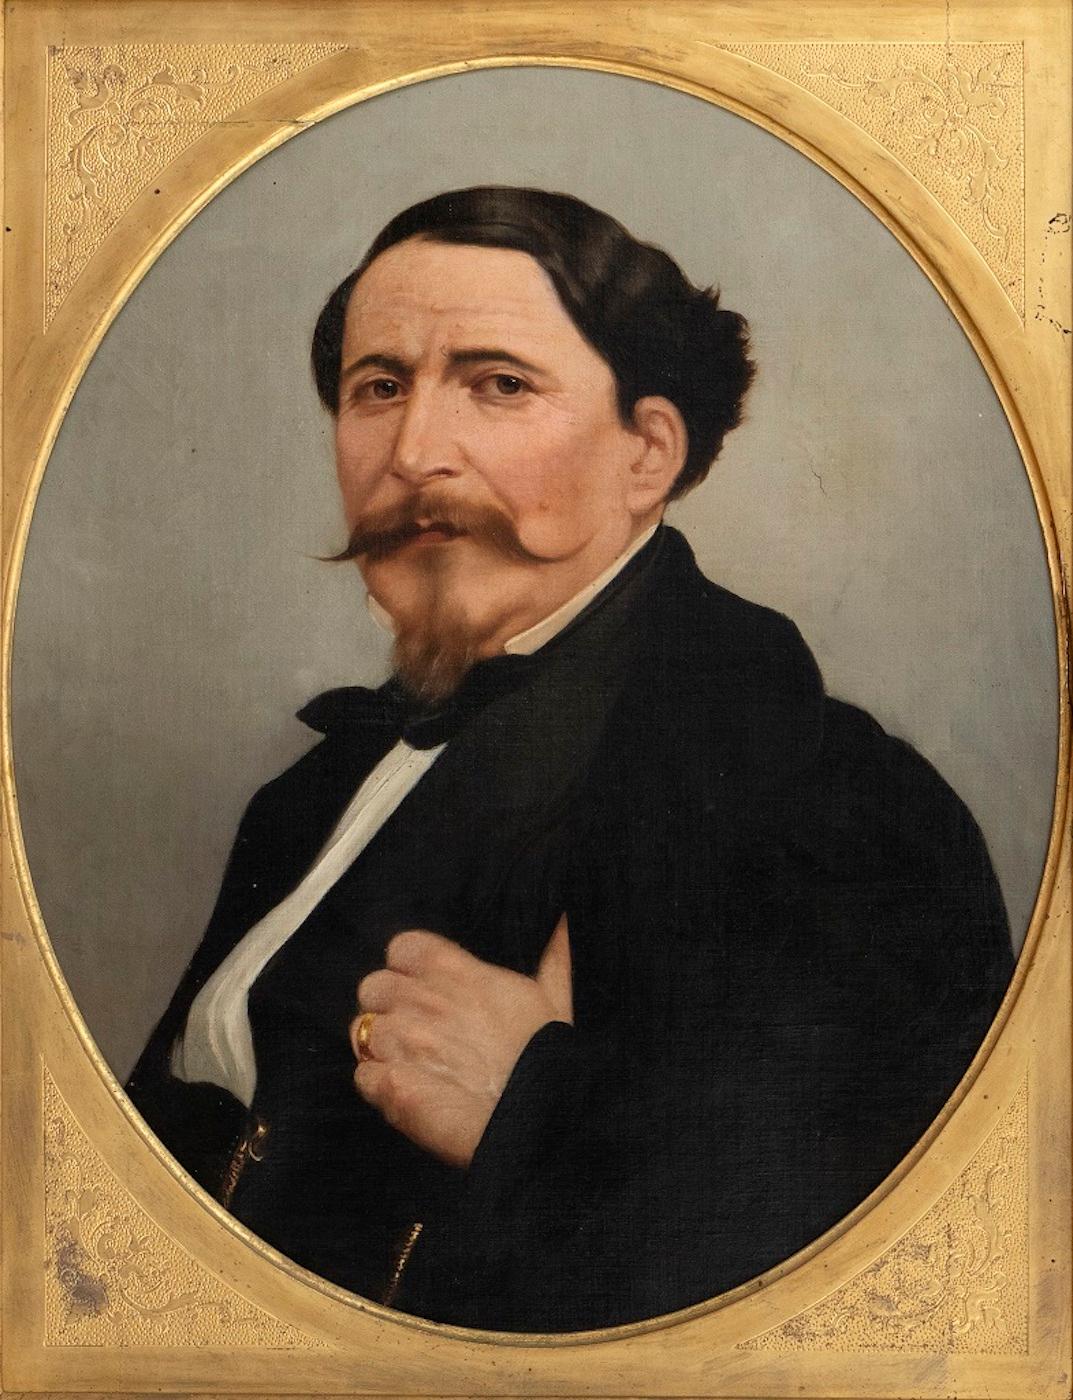 Portrait of a Man - Original Oil on Canvas by M. Gordigiani - Mid 19th Century 